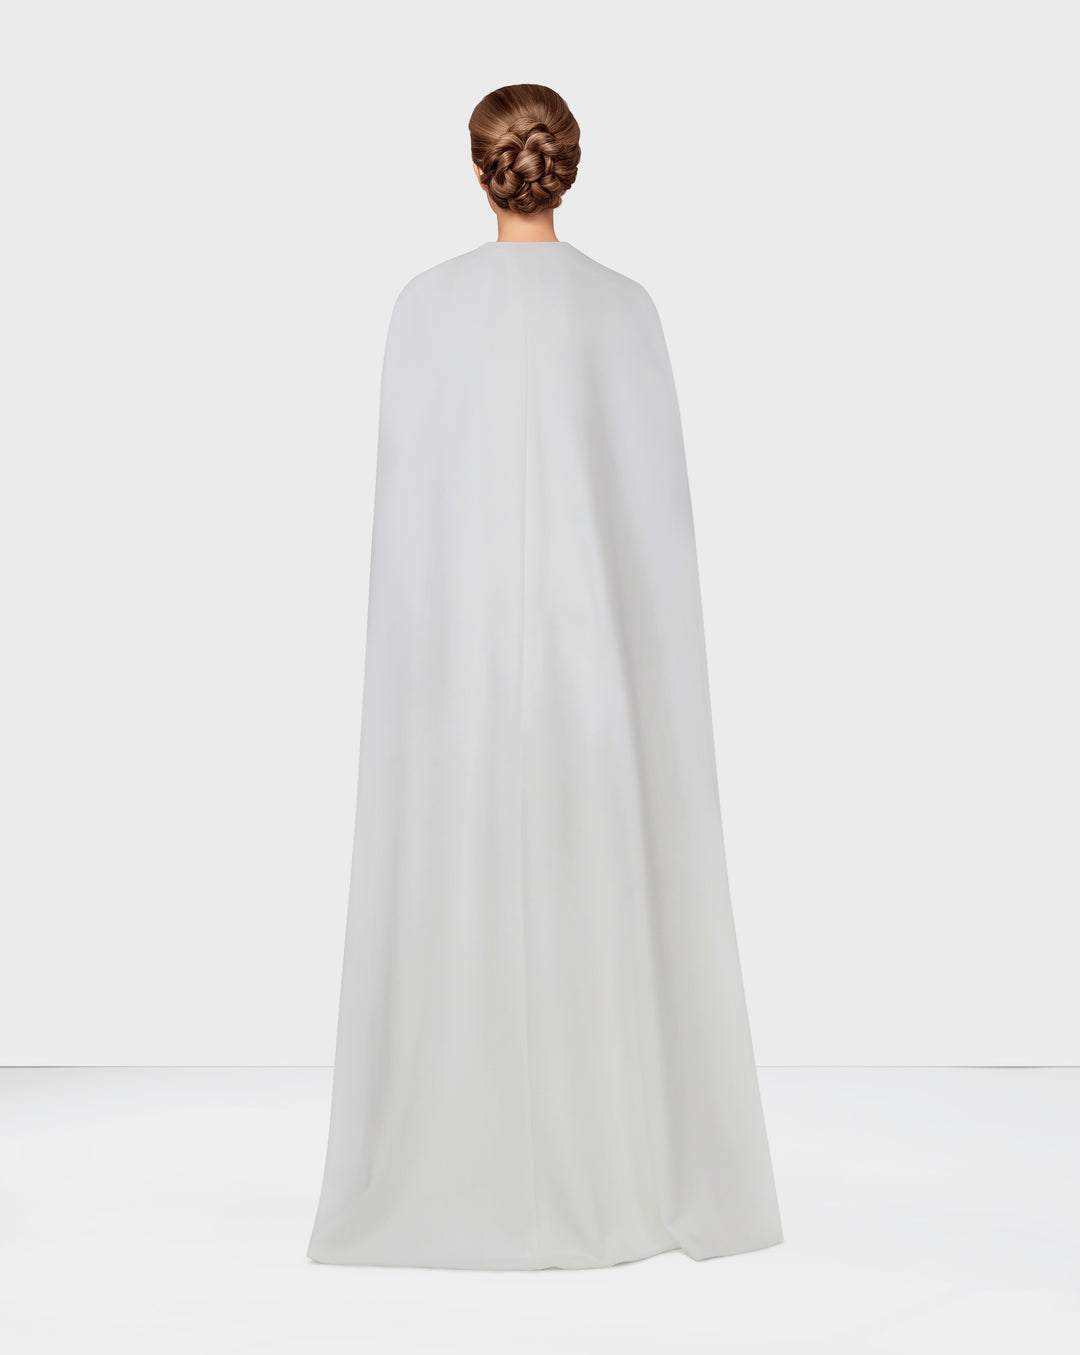 White column dress with cape